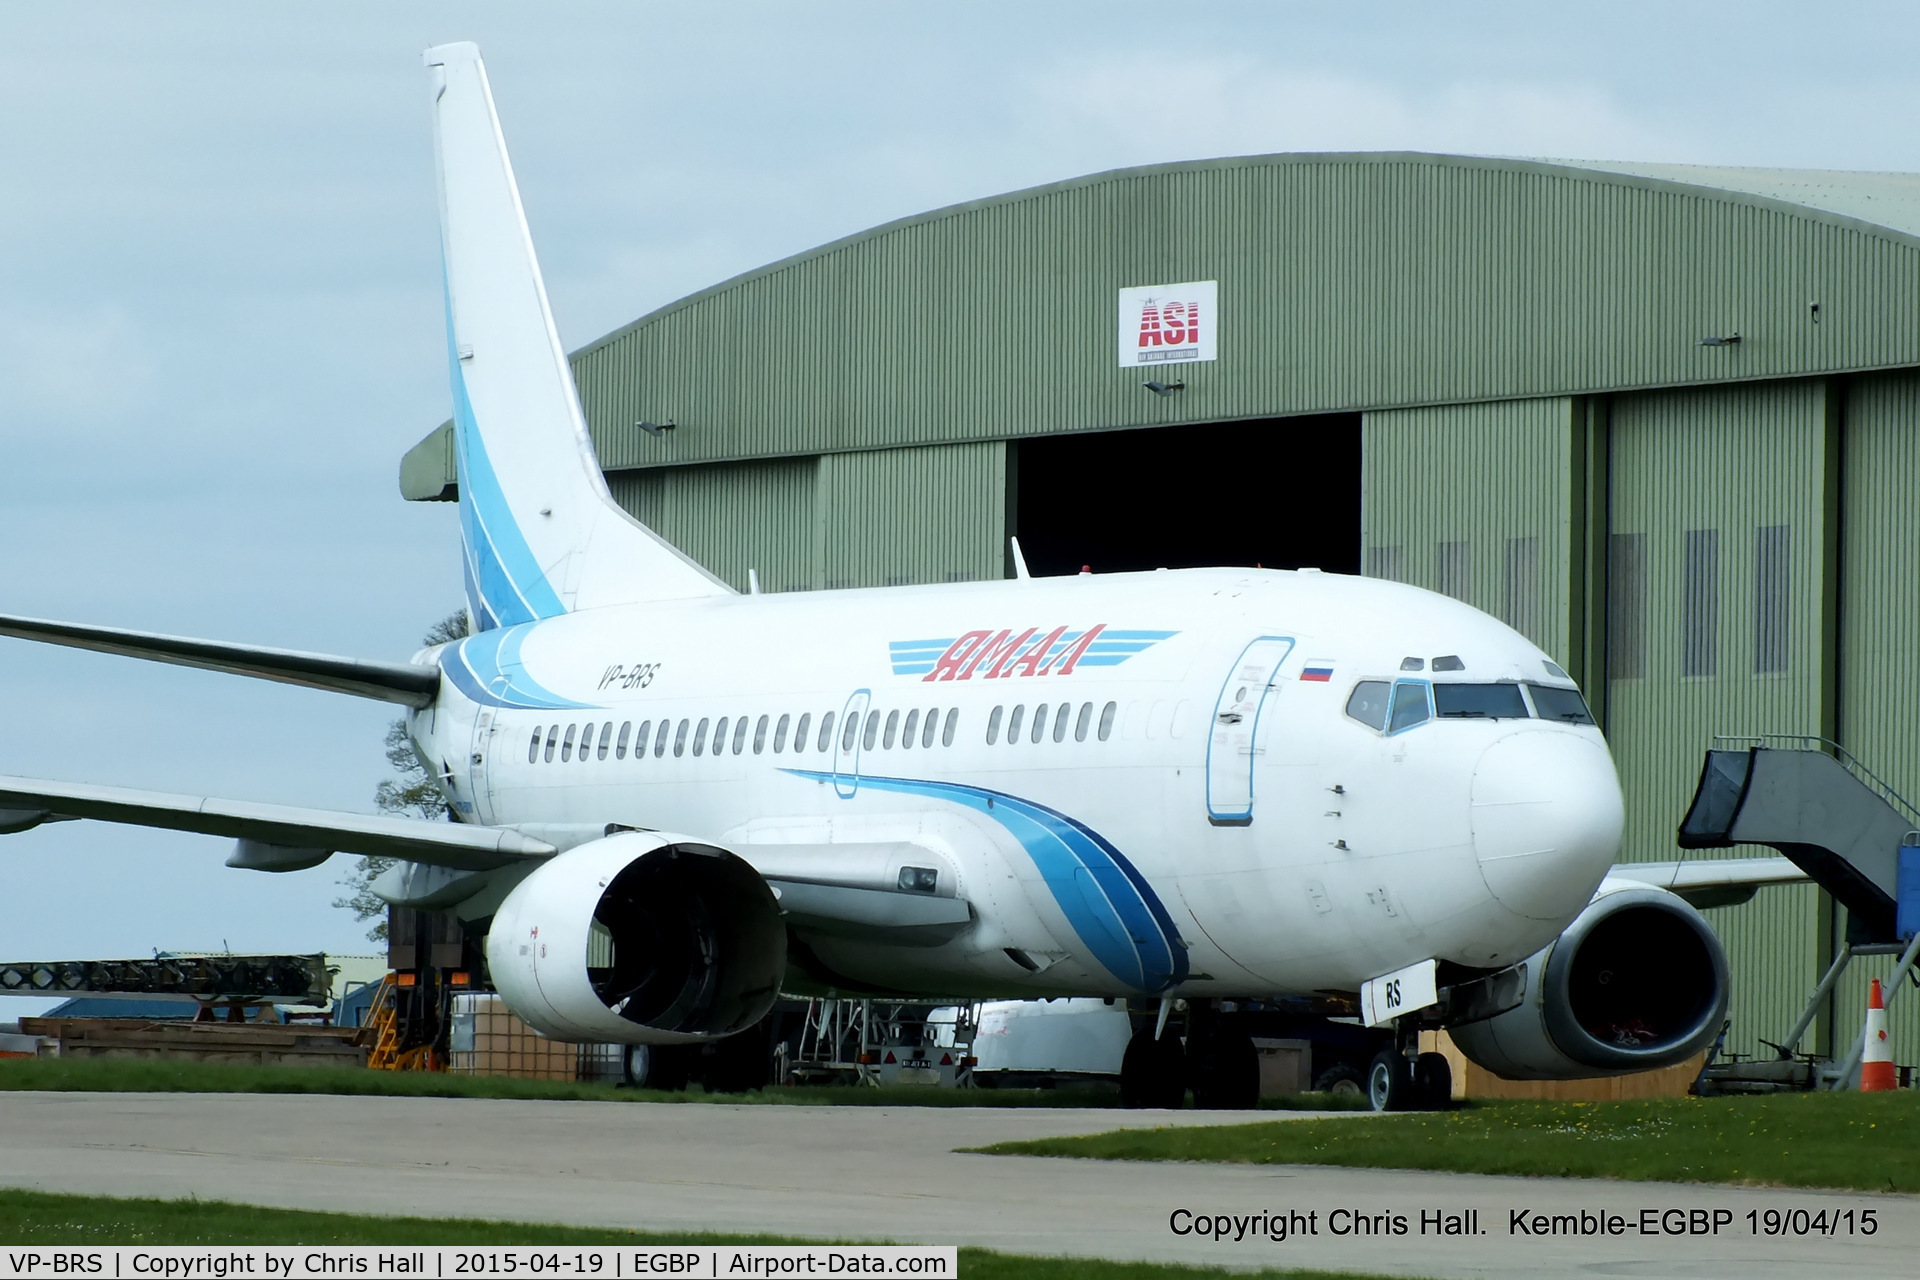 VP-BRS, 1991 Boeing 737-528 C/N 25231, ex Yamal Airlines, in storage at Kemble